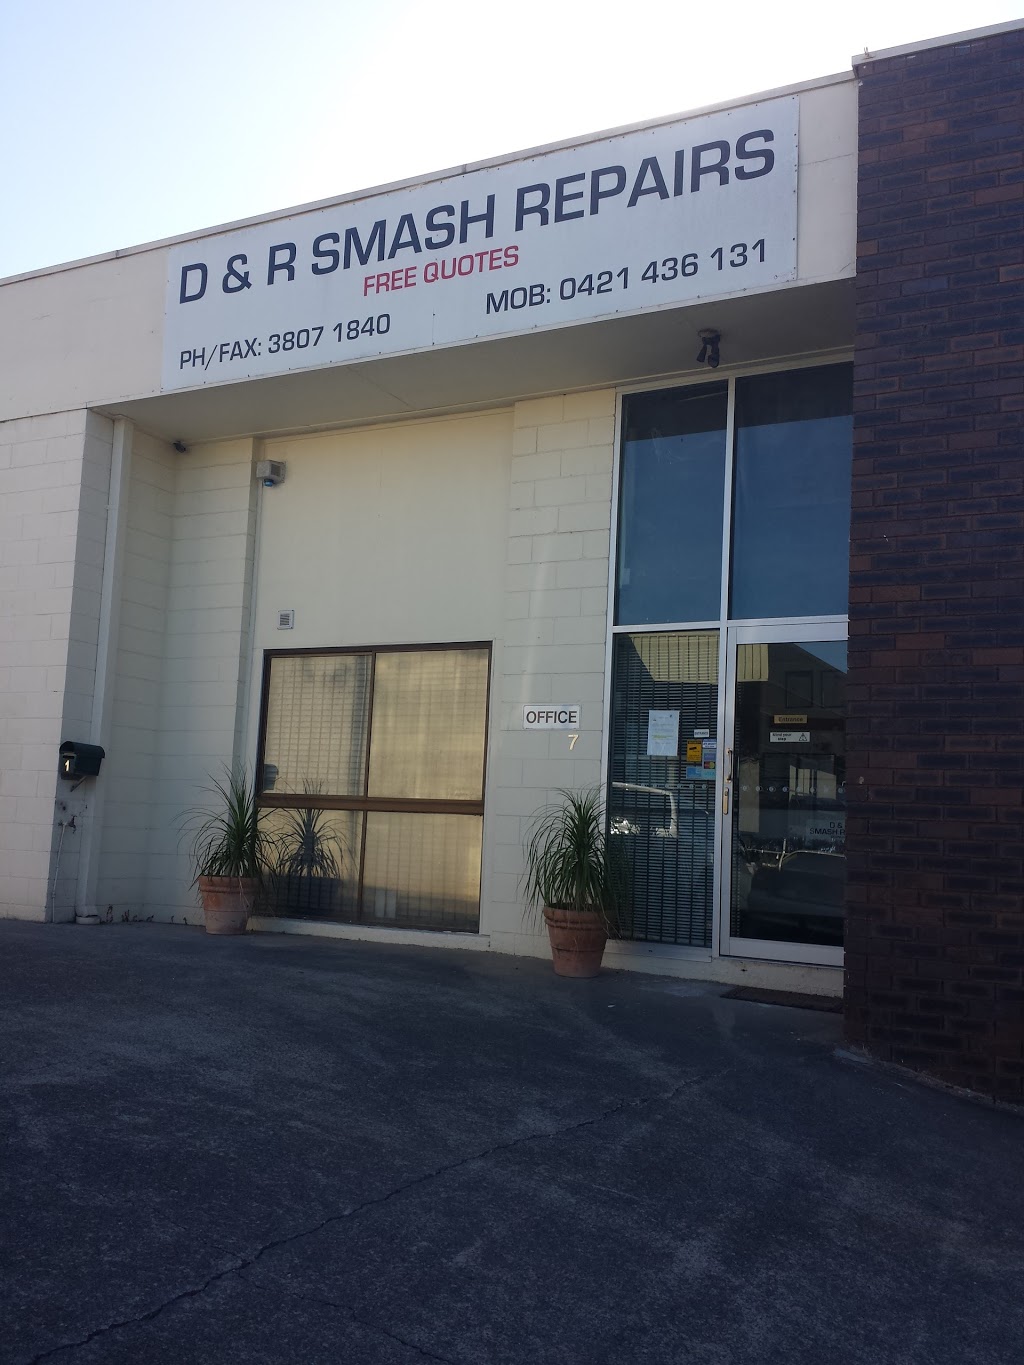 D & R Smash Repairs (Robert Bouverie ) | 1/7 Lochlarney St, Beenleigh QLD 4207, Australia | Phone: (07) 3807 1840